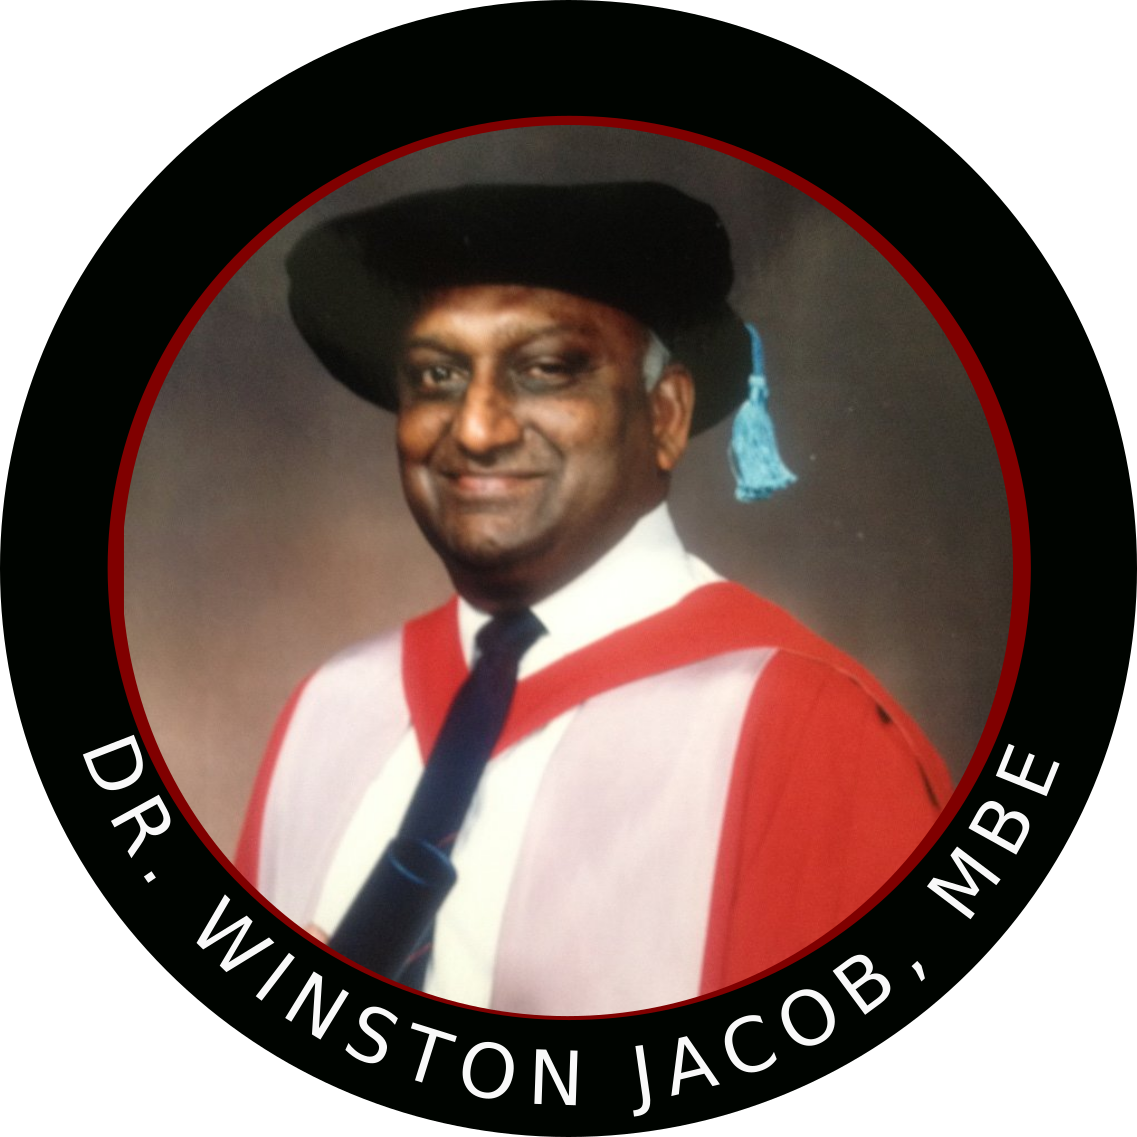 Dr. Winston Jacob, MBE